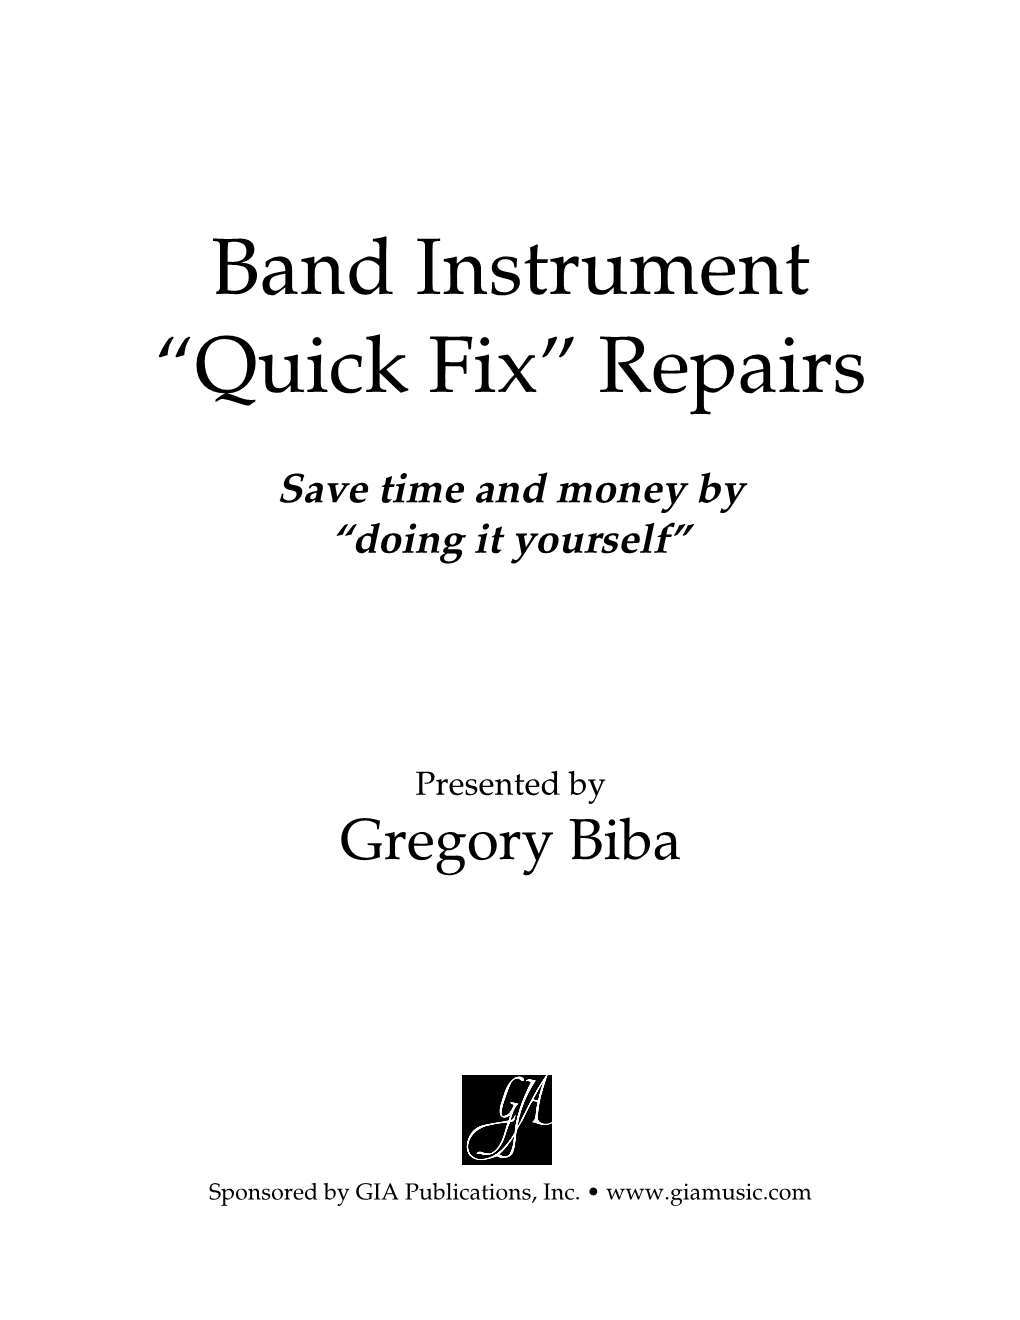 Band Instrument “Quick Fix” Repairs